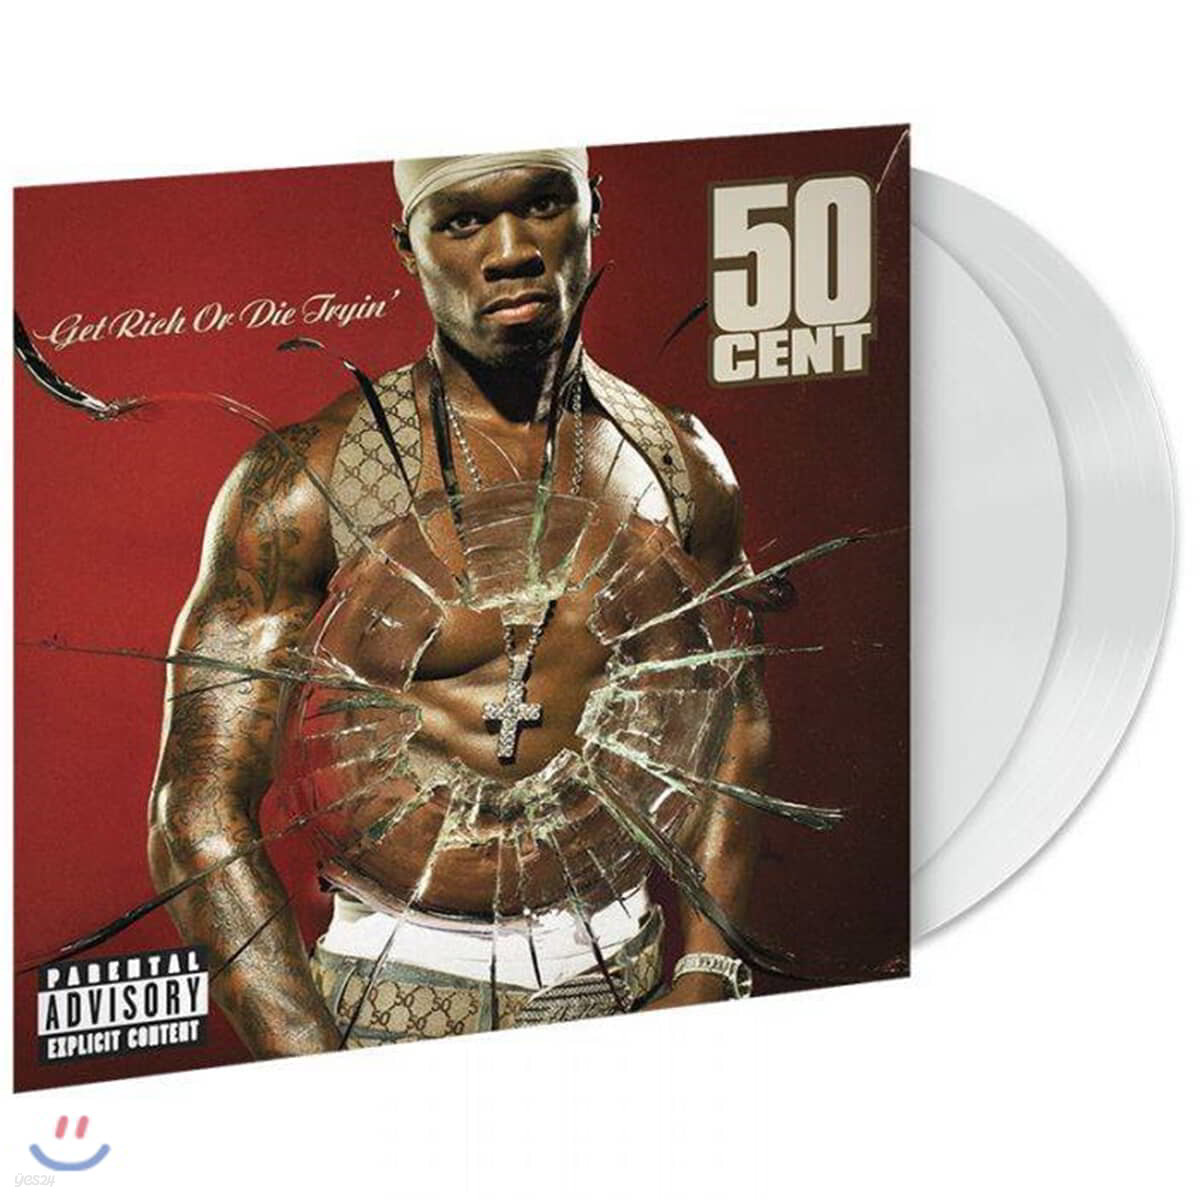 50 Cent (50 센트) - Get Rich Or Die Tryin' 메이저 데뷔 앨범 [투명 컬러 2LP]